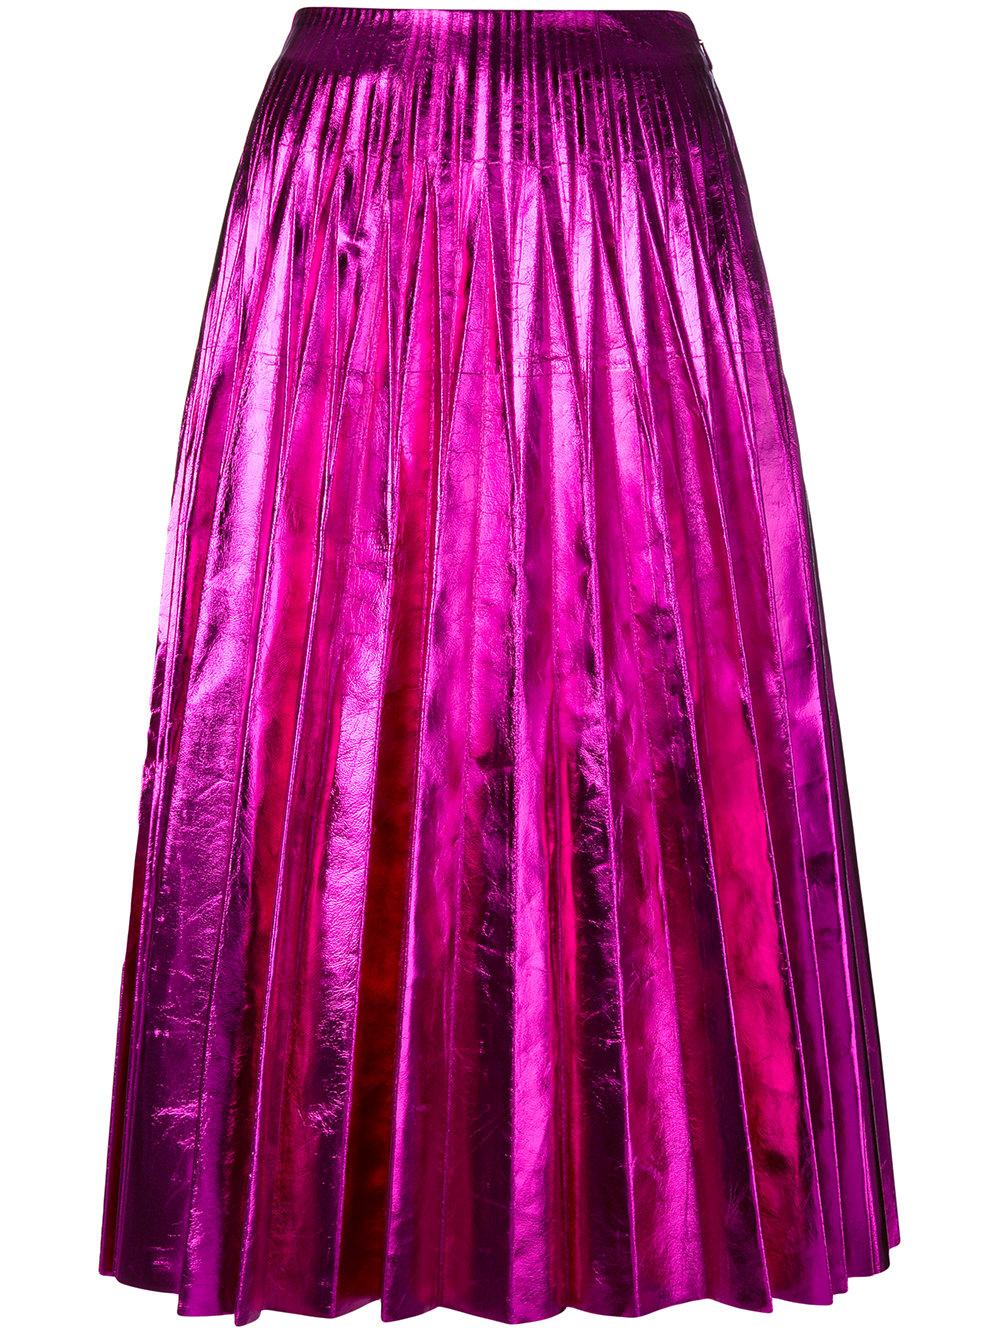 Gucci Pleated Metallic Skirt in Purple | Lyst